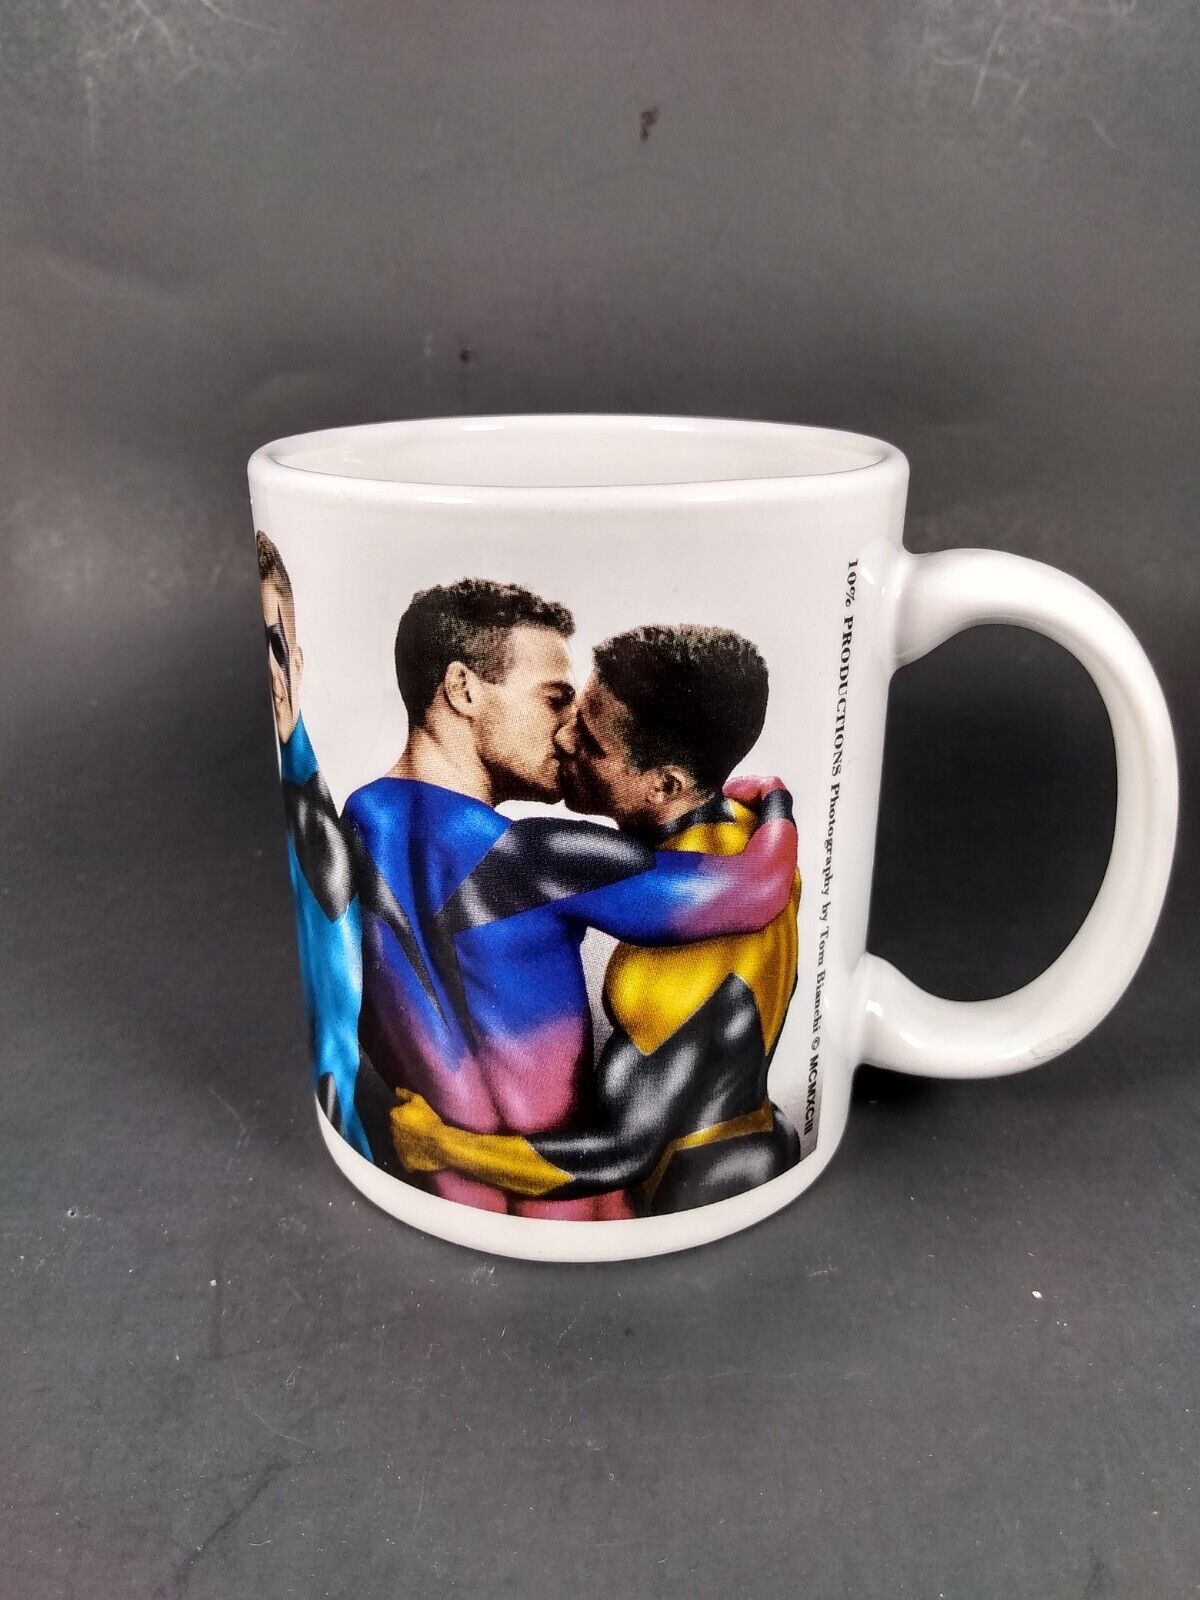 Vintage 1993 LGBTQ Pride Mug You Are My Hero, by Tom Bianchi 